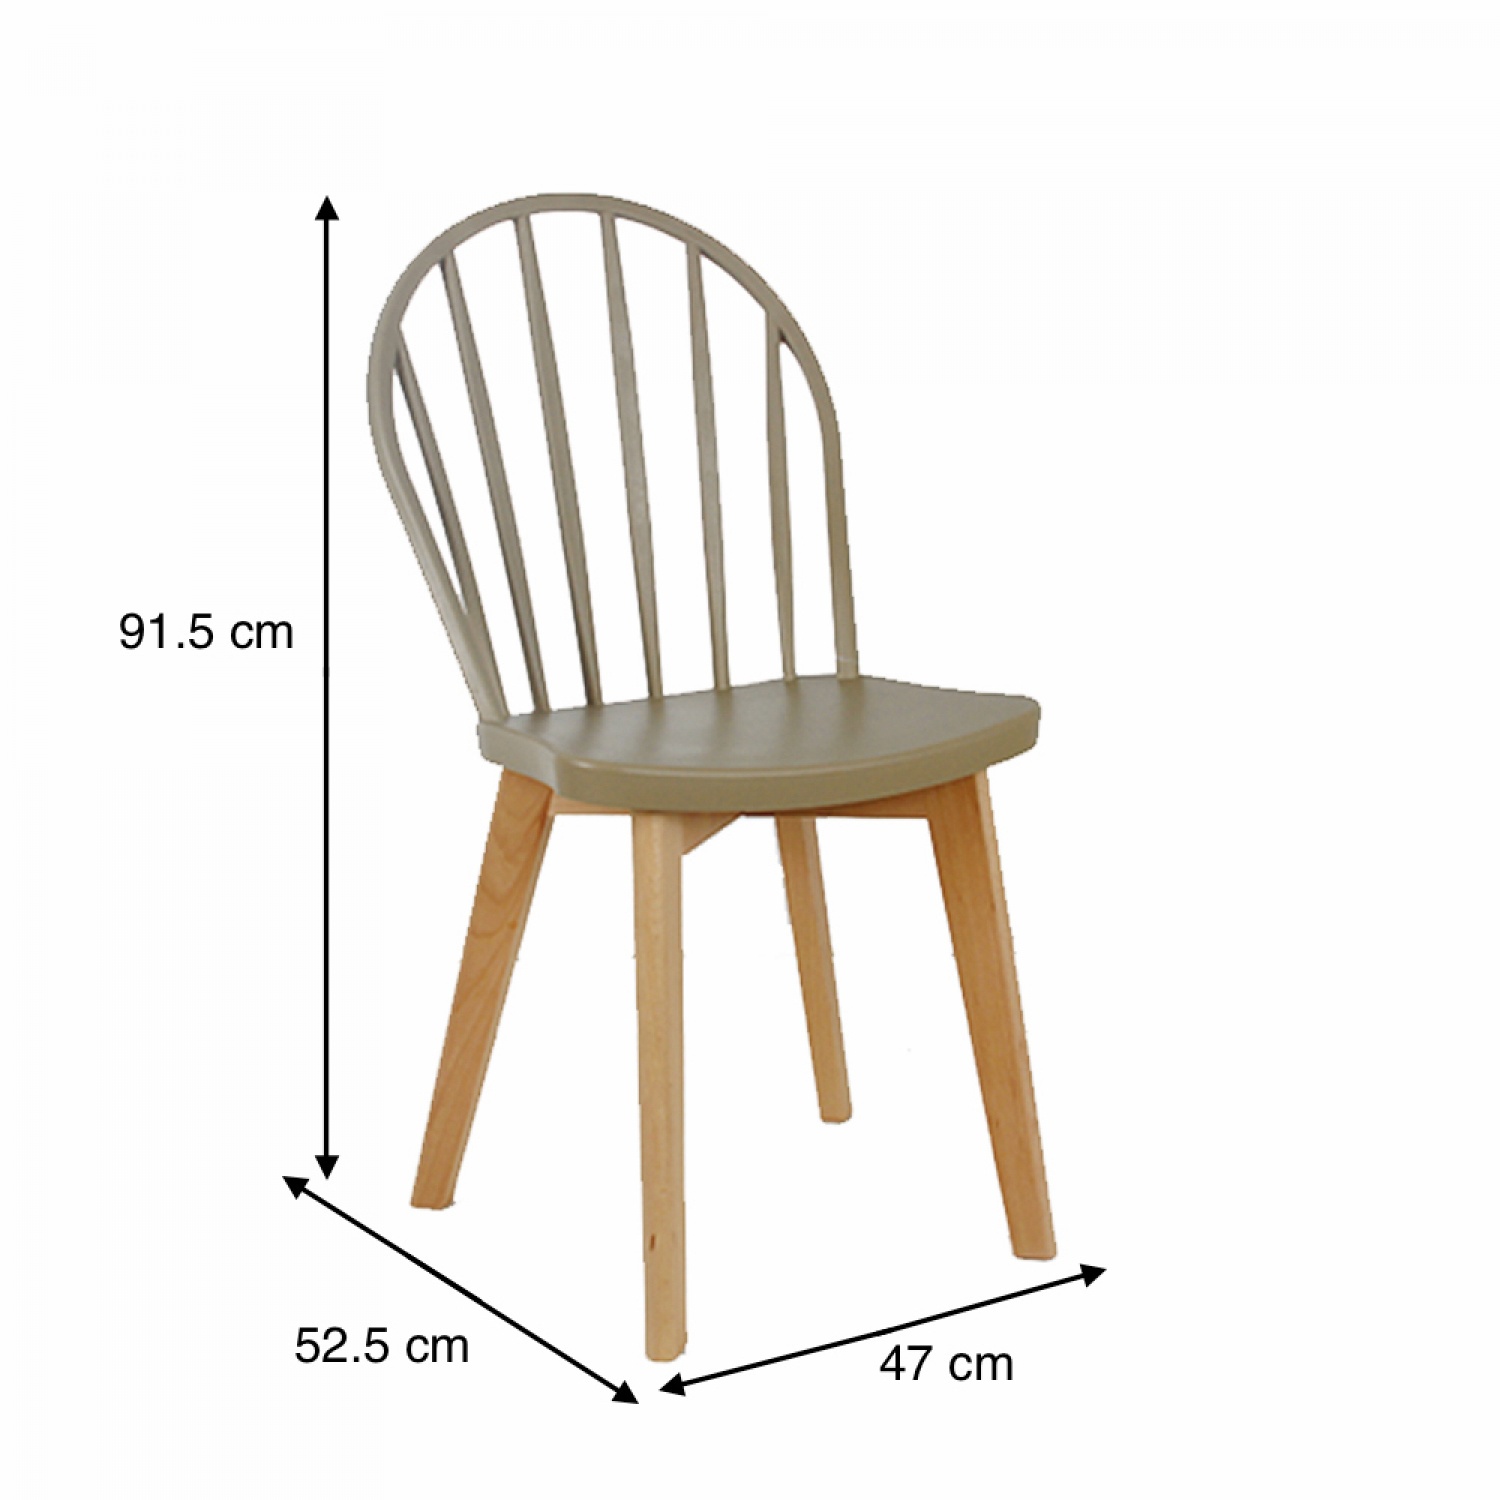 Pulito เก้าอี้พลาสติกขาไม้ ขนาด 52.5x47x91.5ซม. PP-698A-GR03 สีเบจ